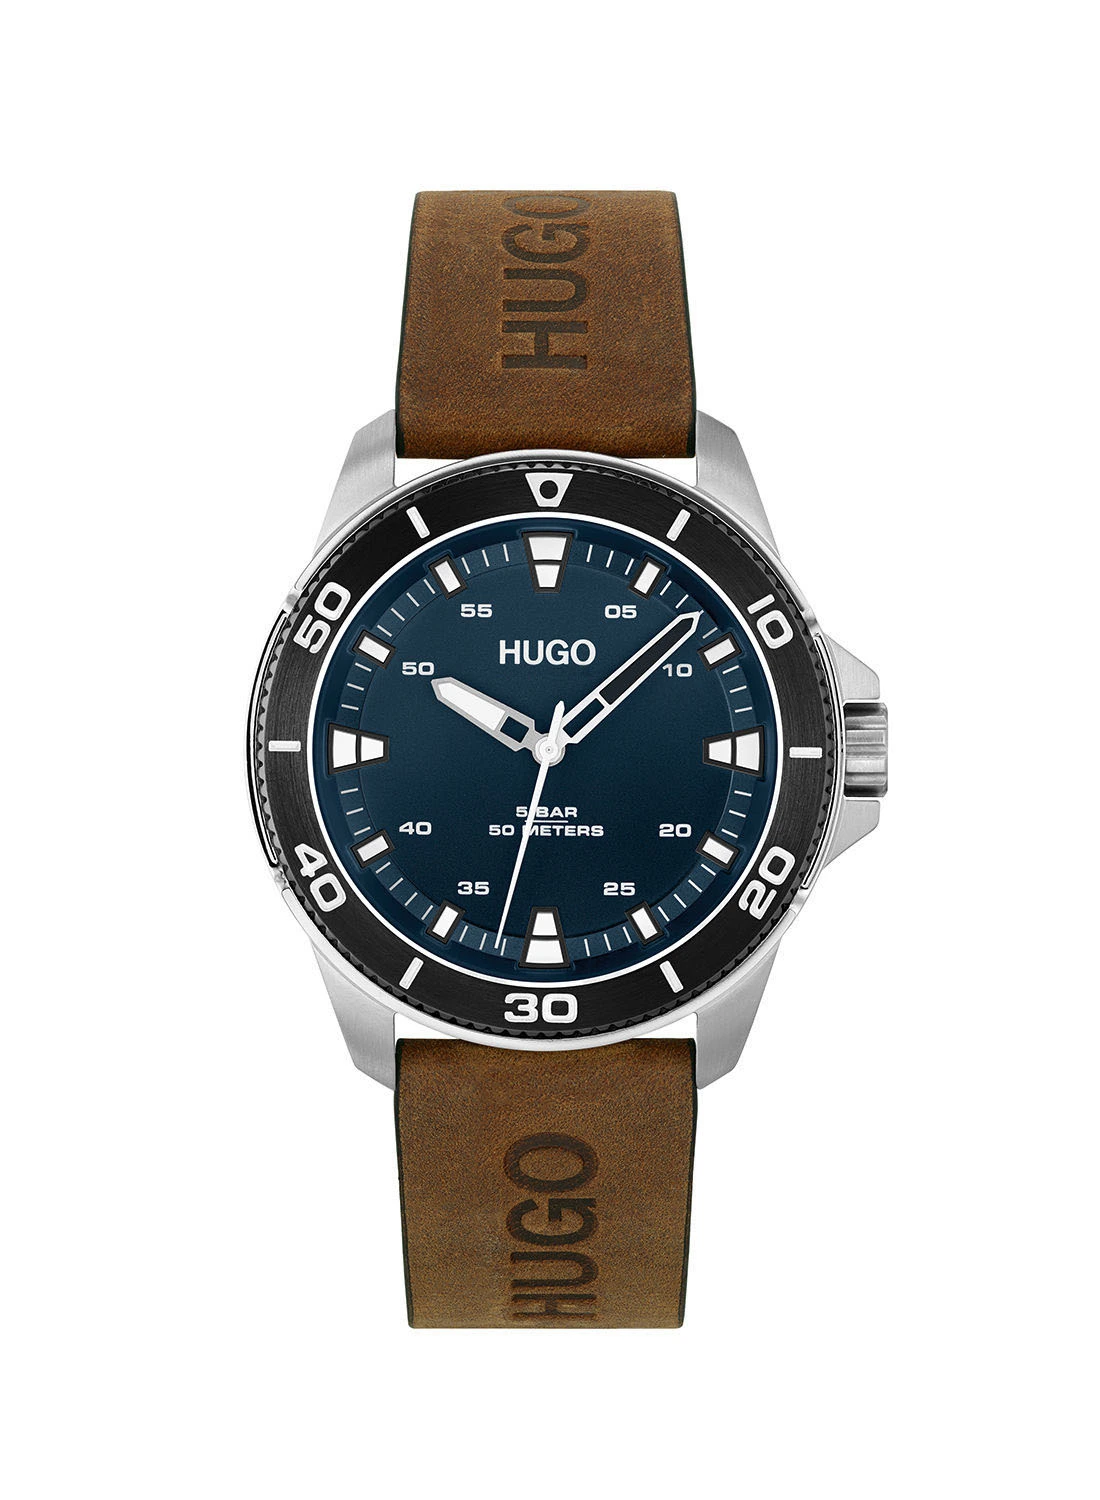 HUGO BOSS Men's Streetdiver Blue Dial Watch - 1530220